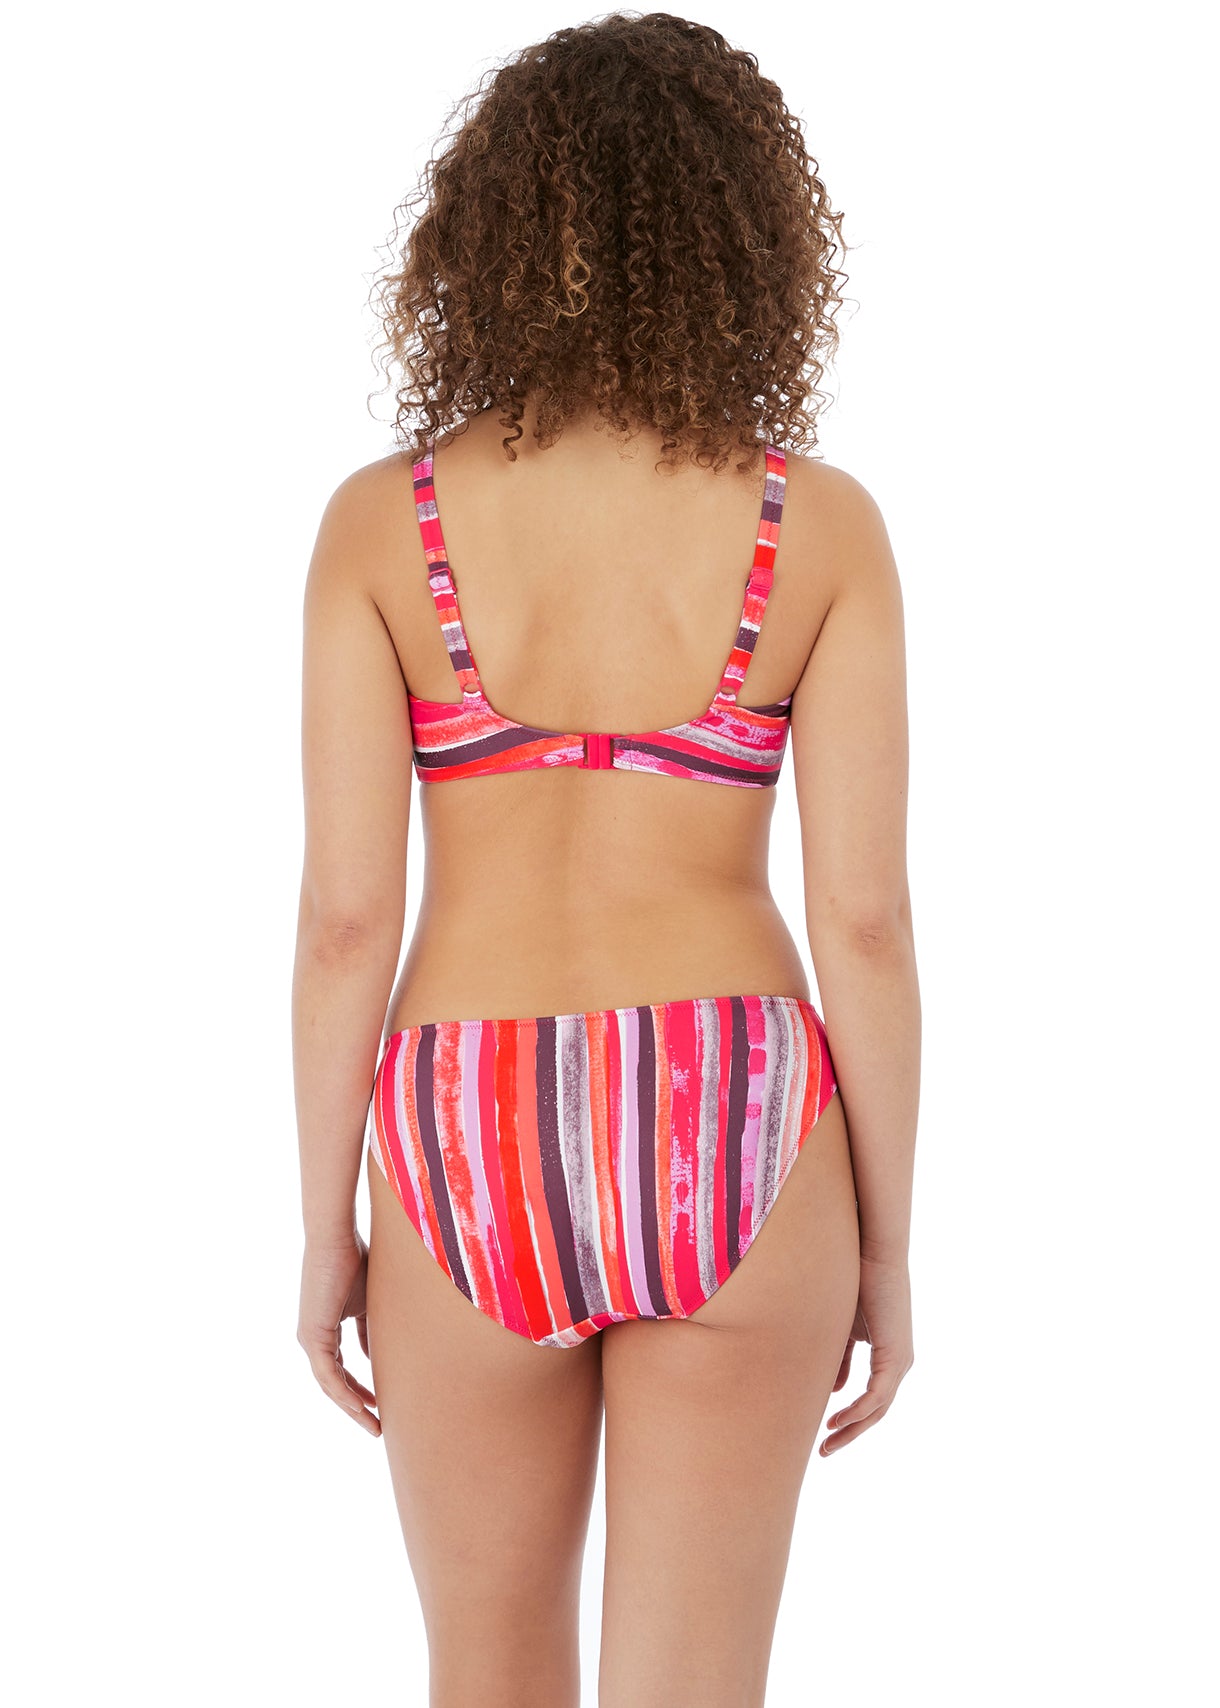 Zentoa Women's Racerback Mesh Detail Bikini Swimsuit Top LB3 Mauve Small NWT